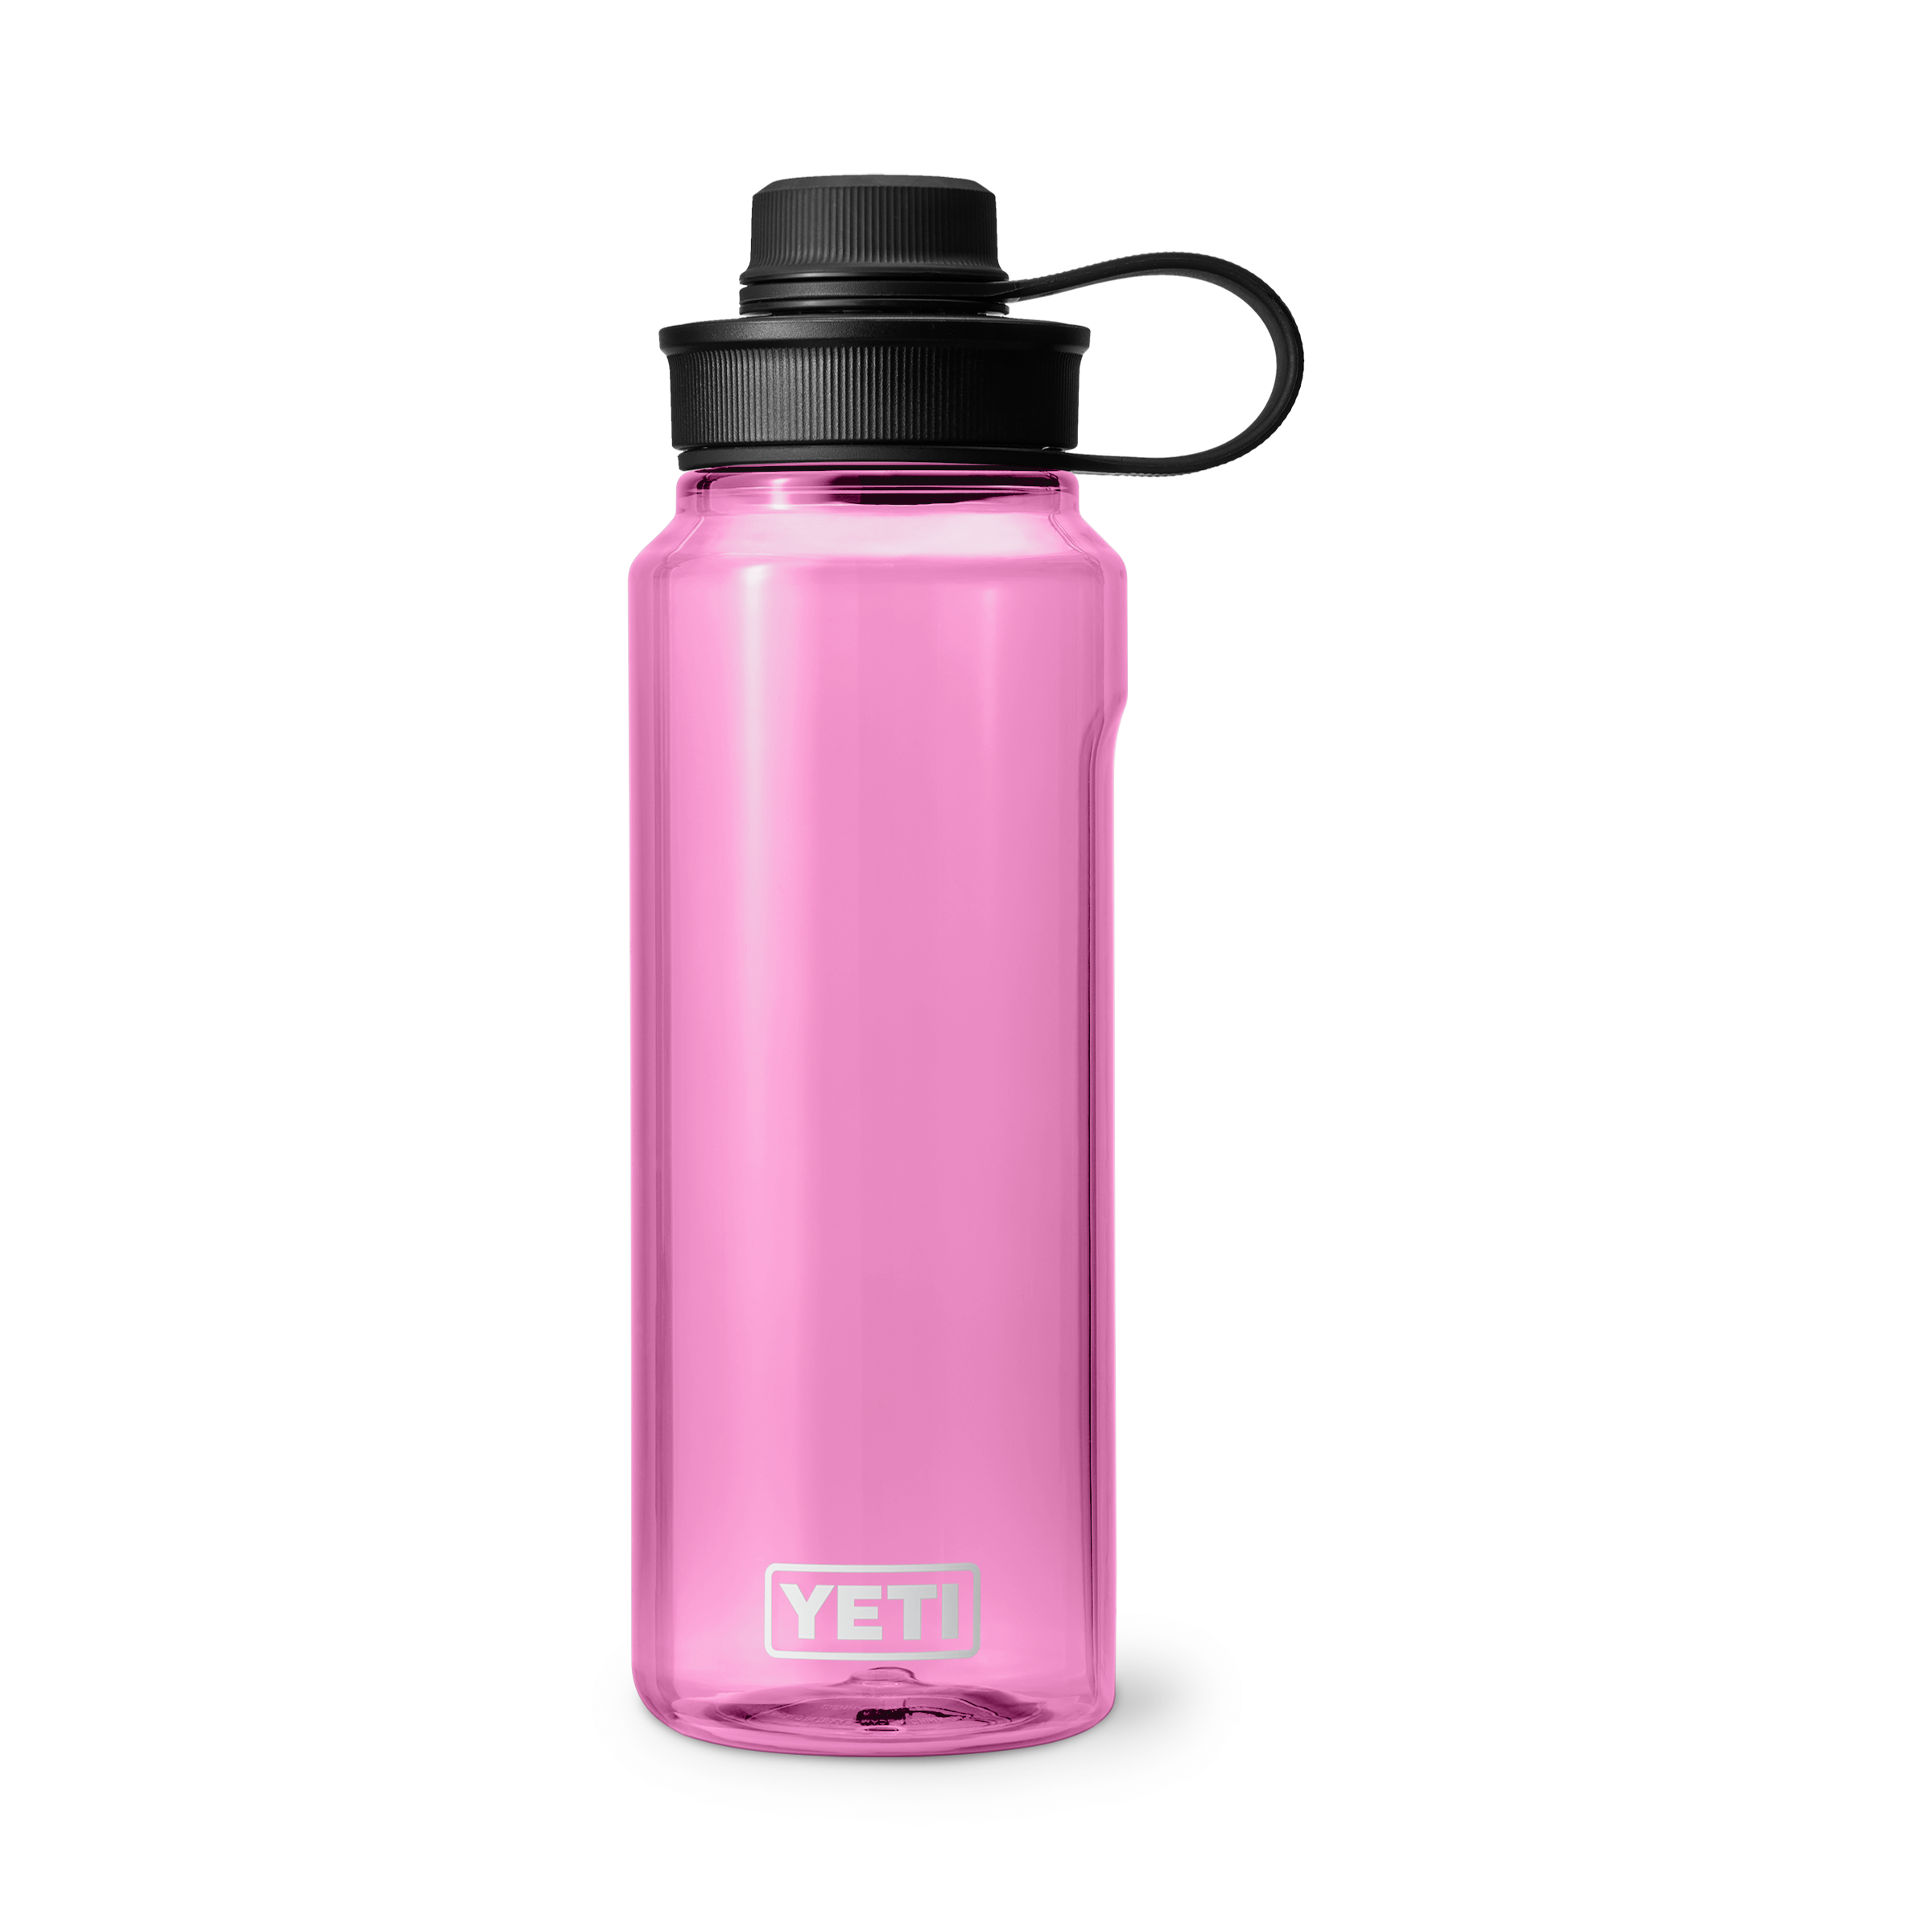 Custom Logo Yeti Yonder Water Bottle Review 